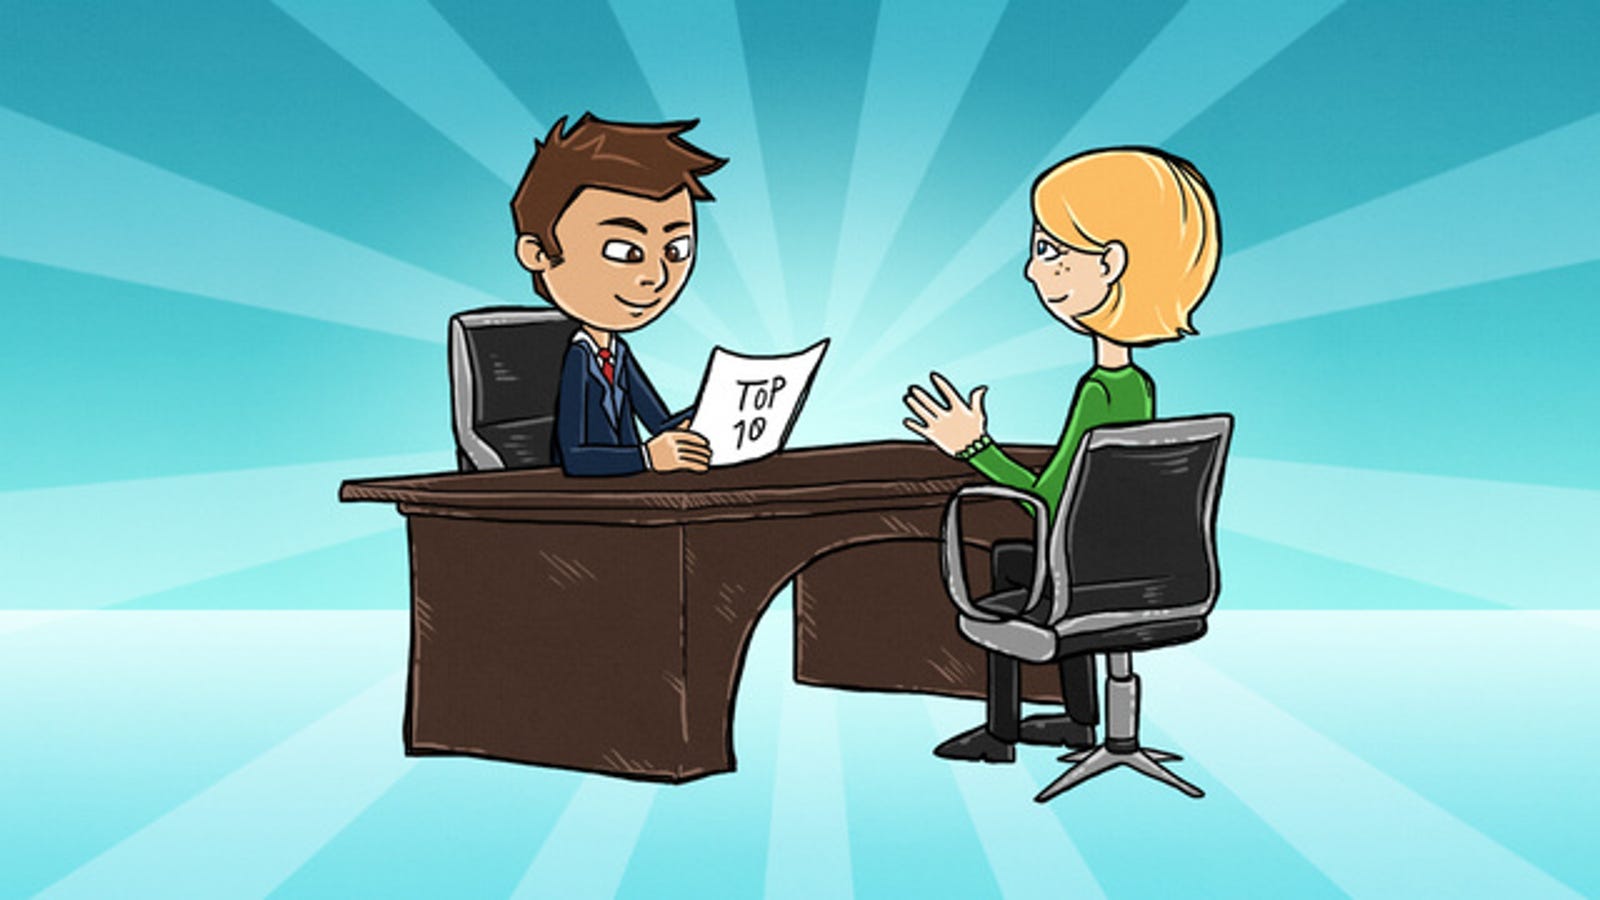 Top 10 Tips For Acing Your Next Job Interview